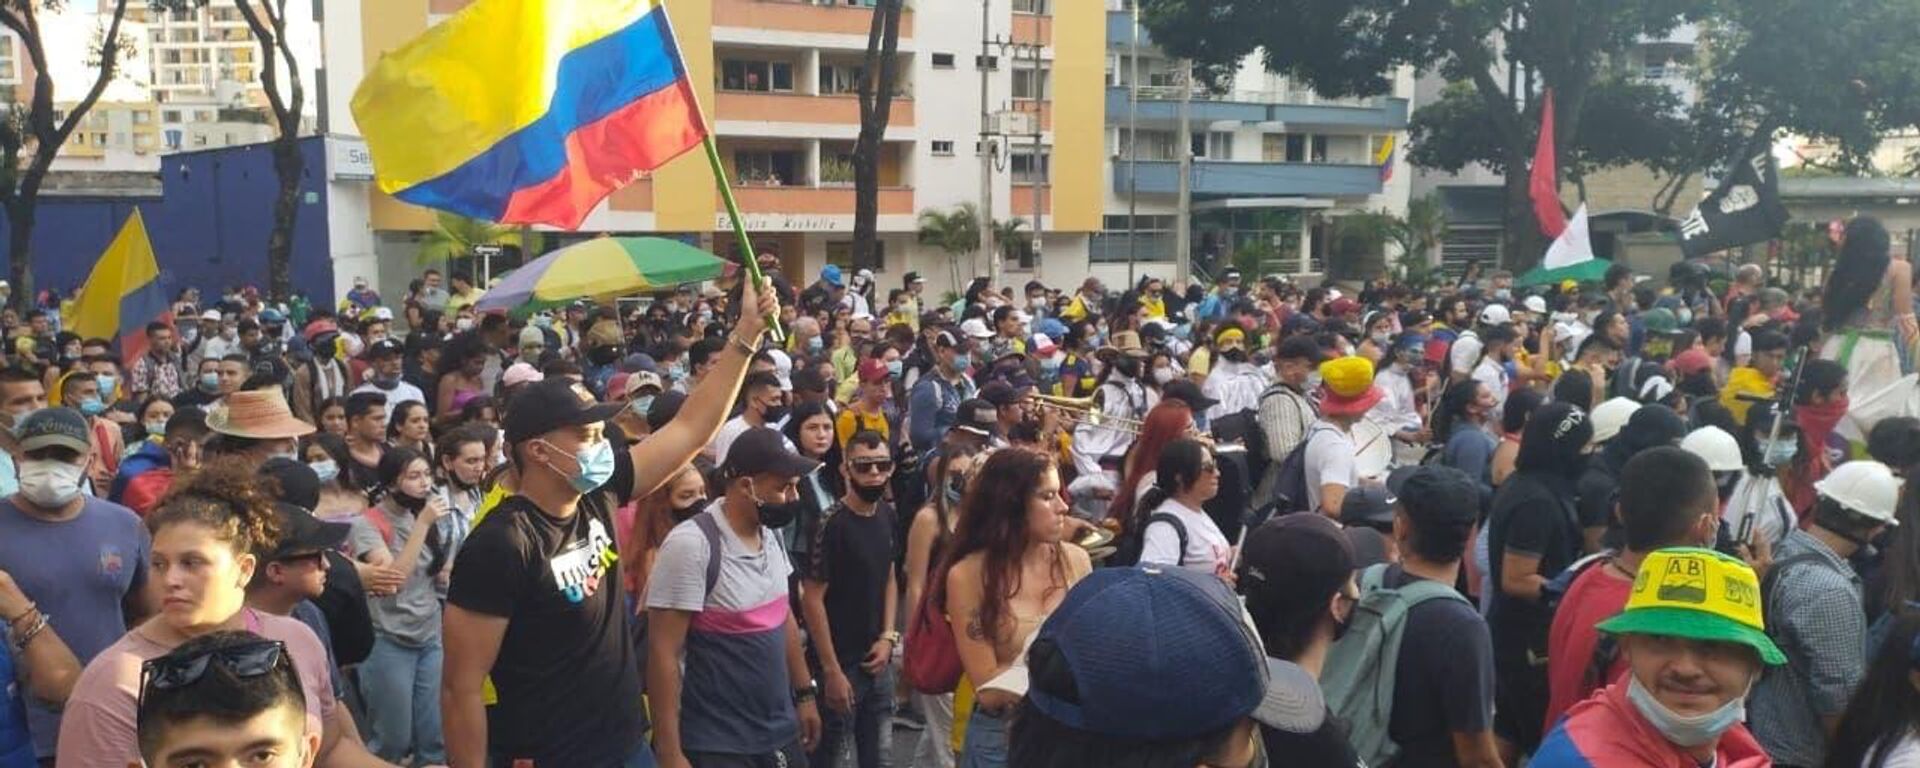 Manifestación en Bucaramanga, Colombia - Sputnik Mundo, 1920, 21.07.2021